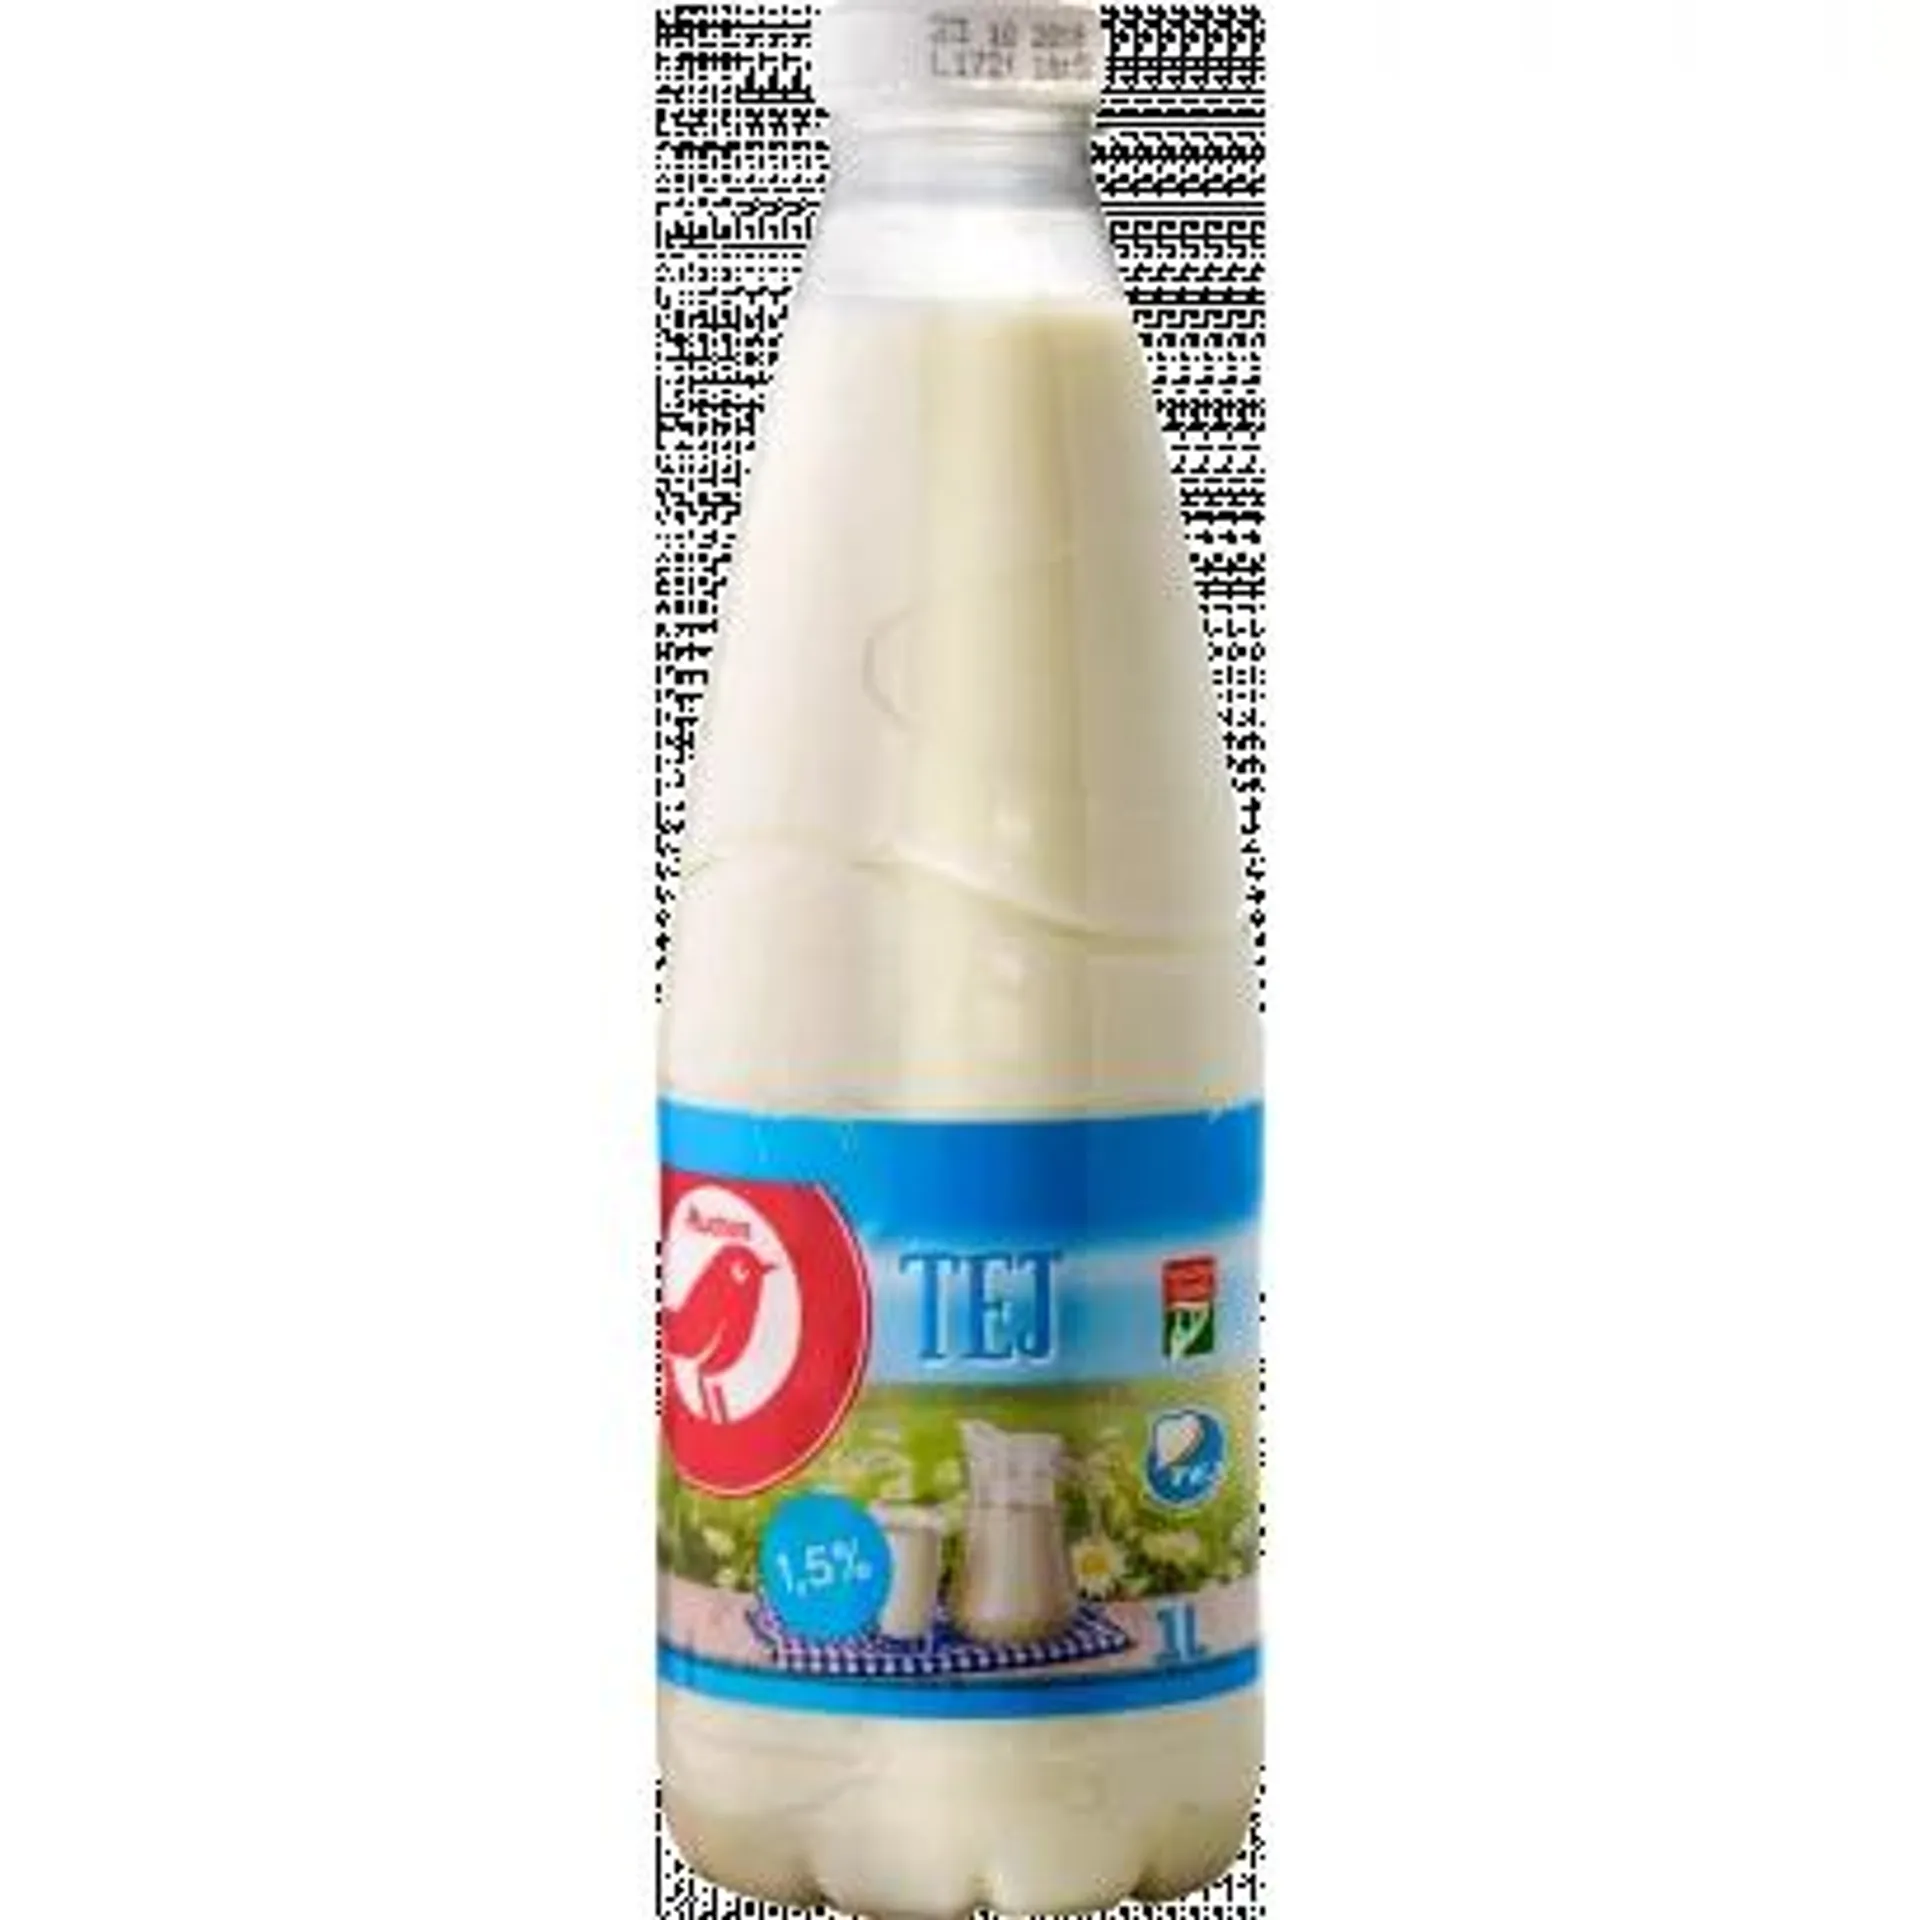 AUCHAN ESL bottled milk 1.5% 1l